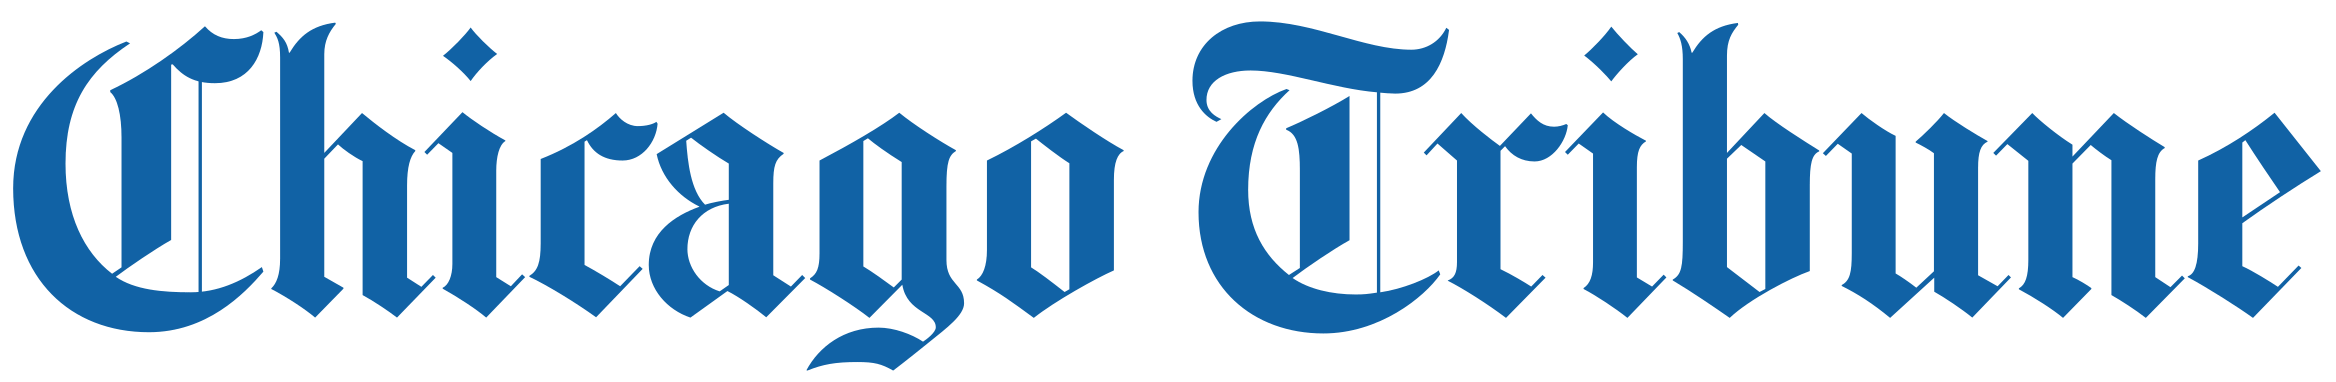 Chicago_Tribune-Logo